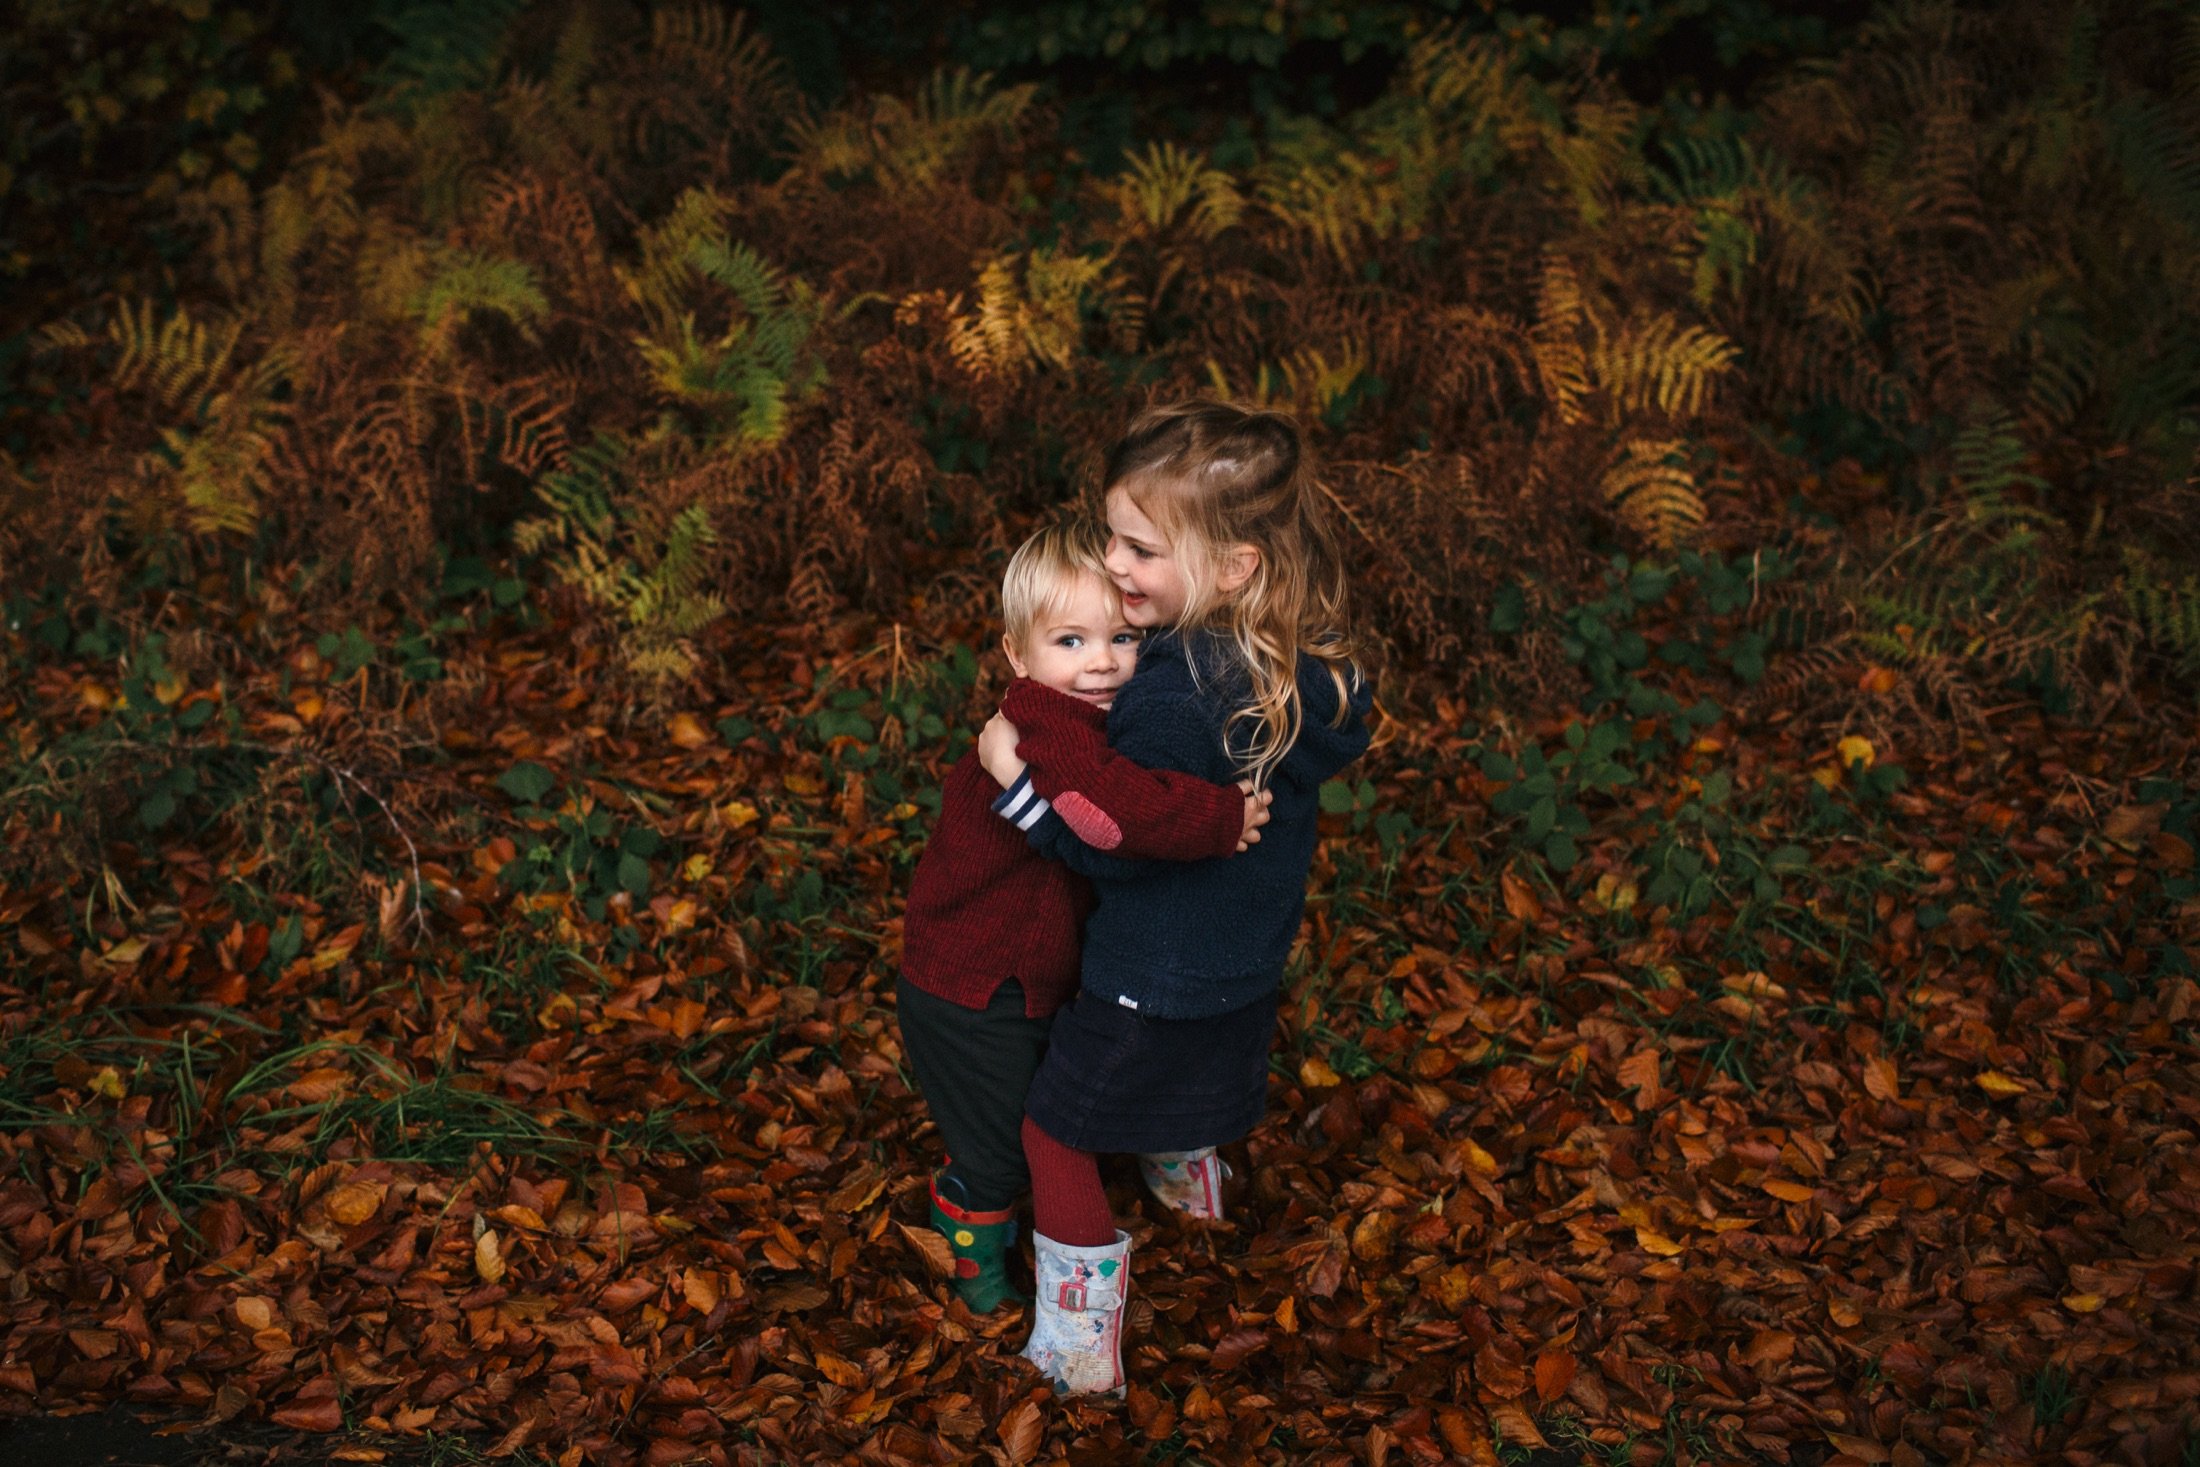 Family Photographer Devon & Cornwall_Autumn Natural Family Photoshoot_034.jpg